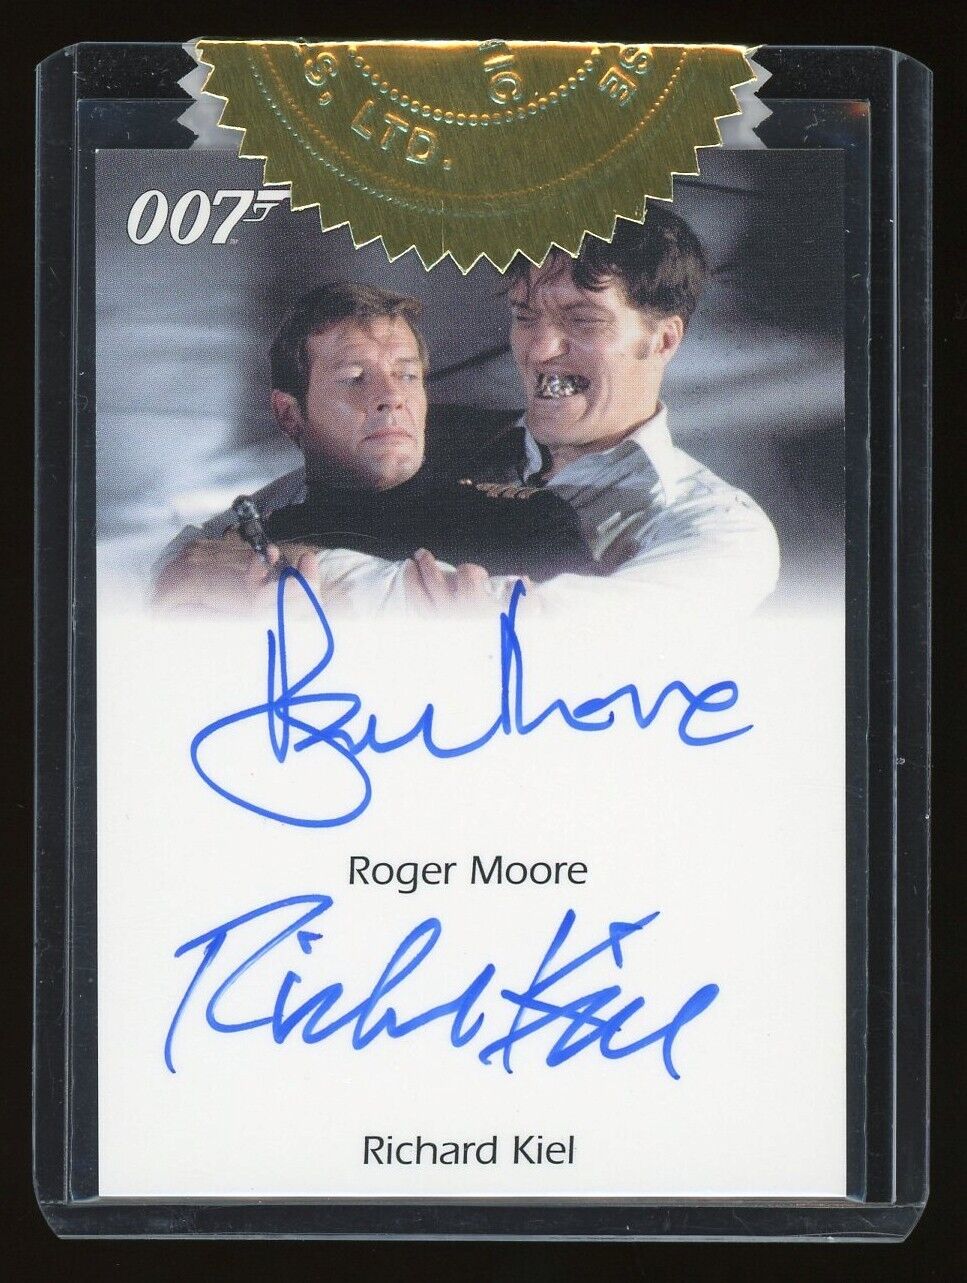 2009 Rittenhouse James Bond 007 Roger Moore & Richard Kiel Dual Autograph Auto